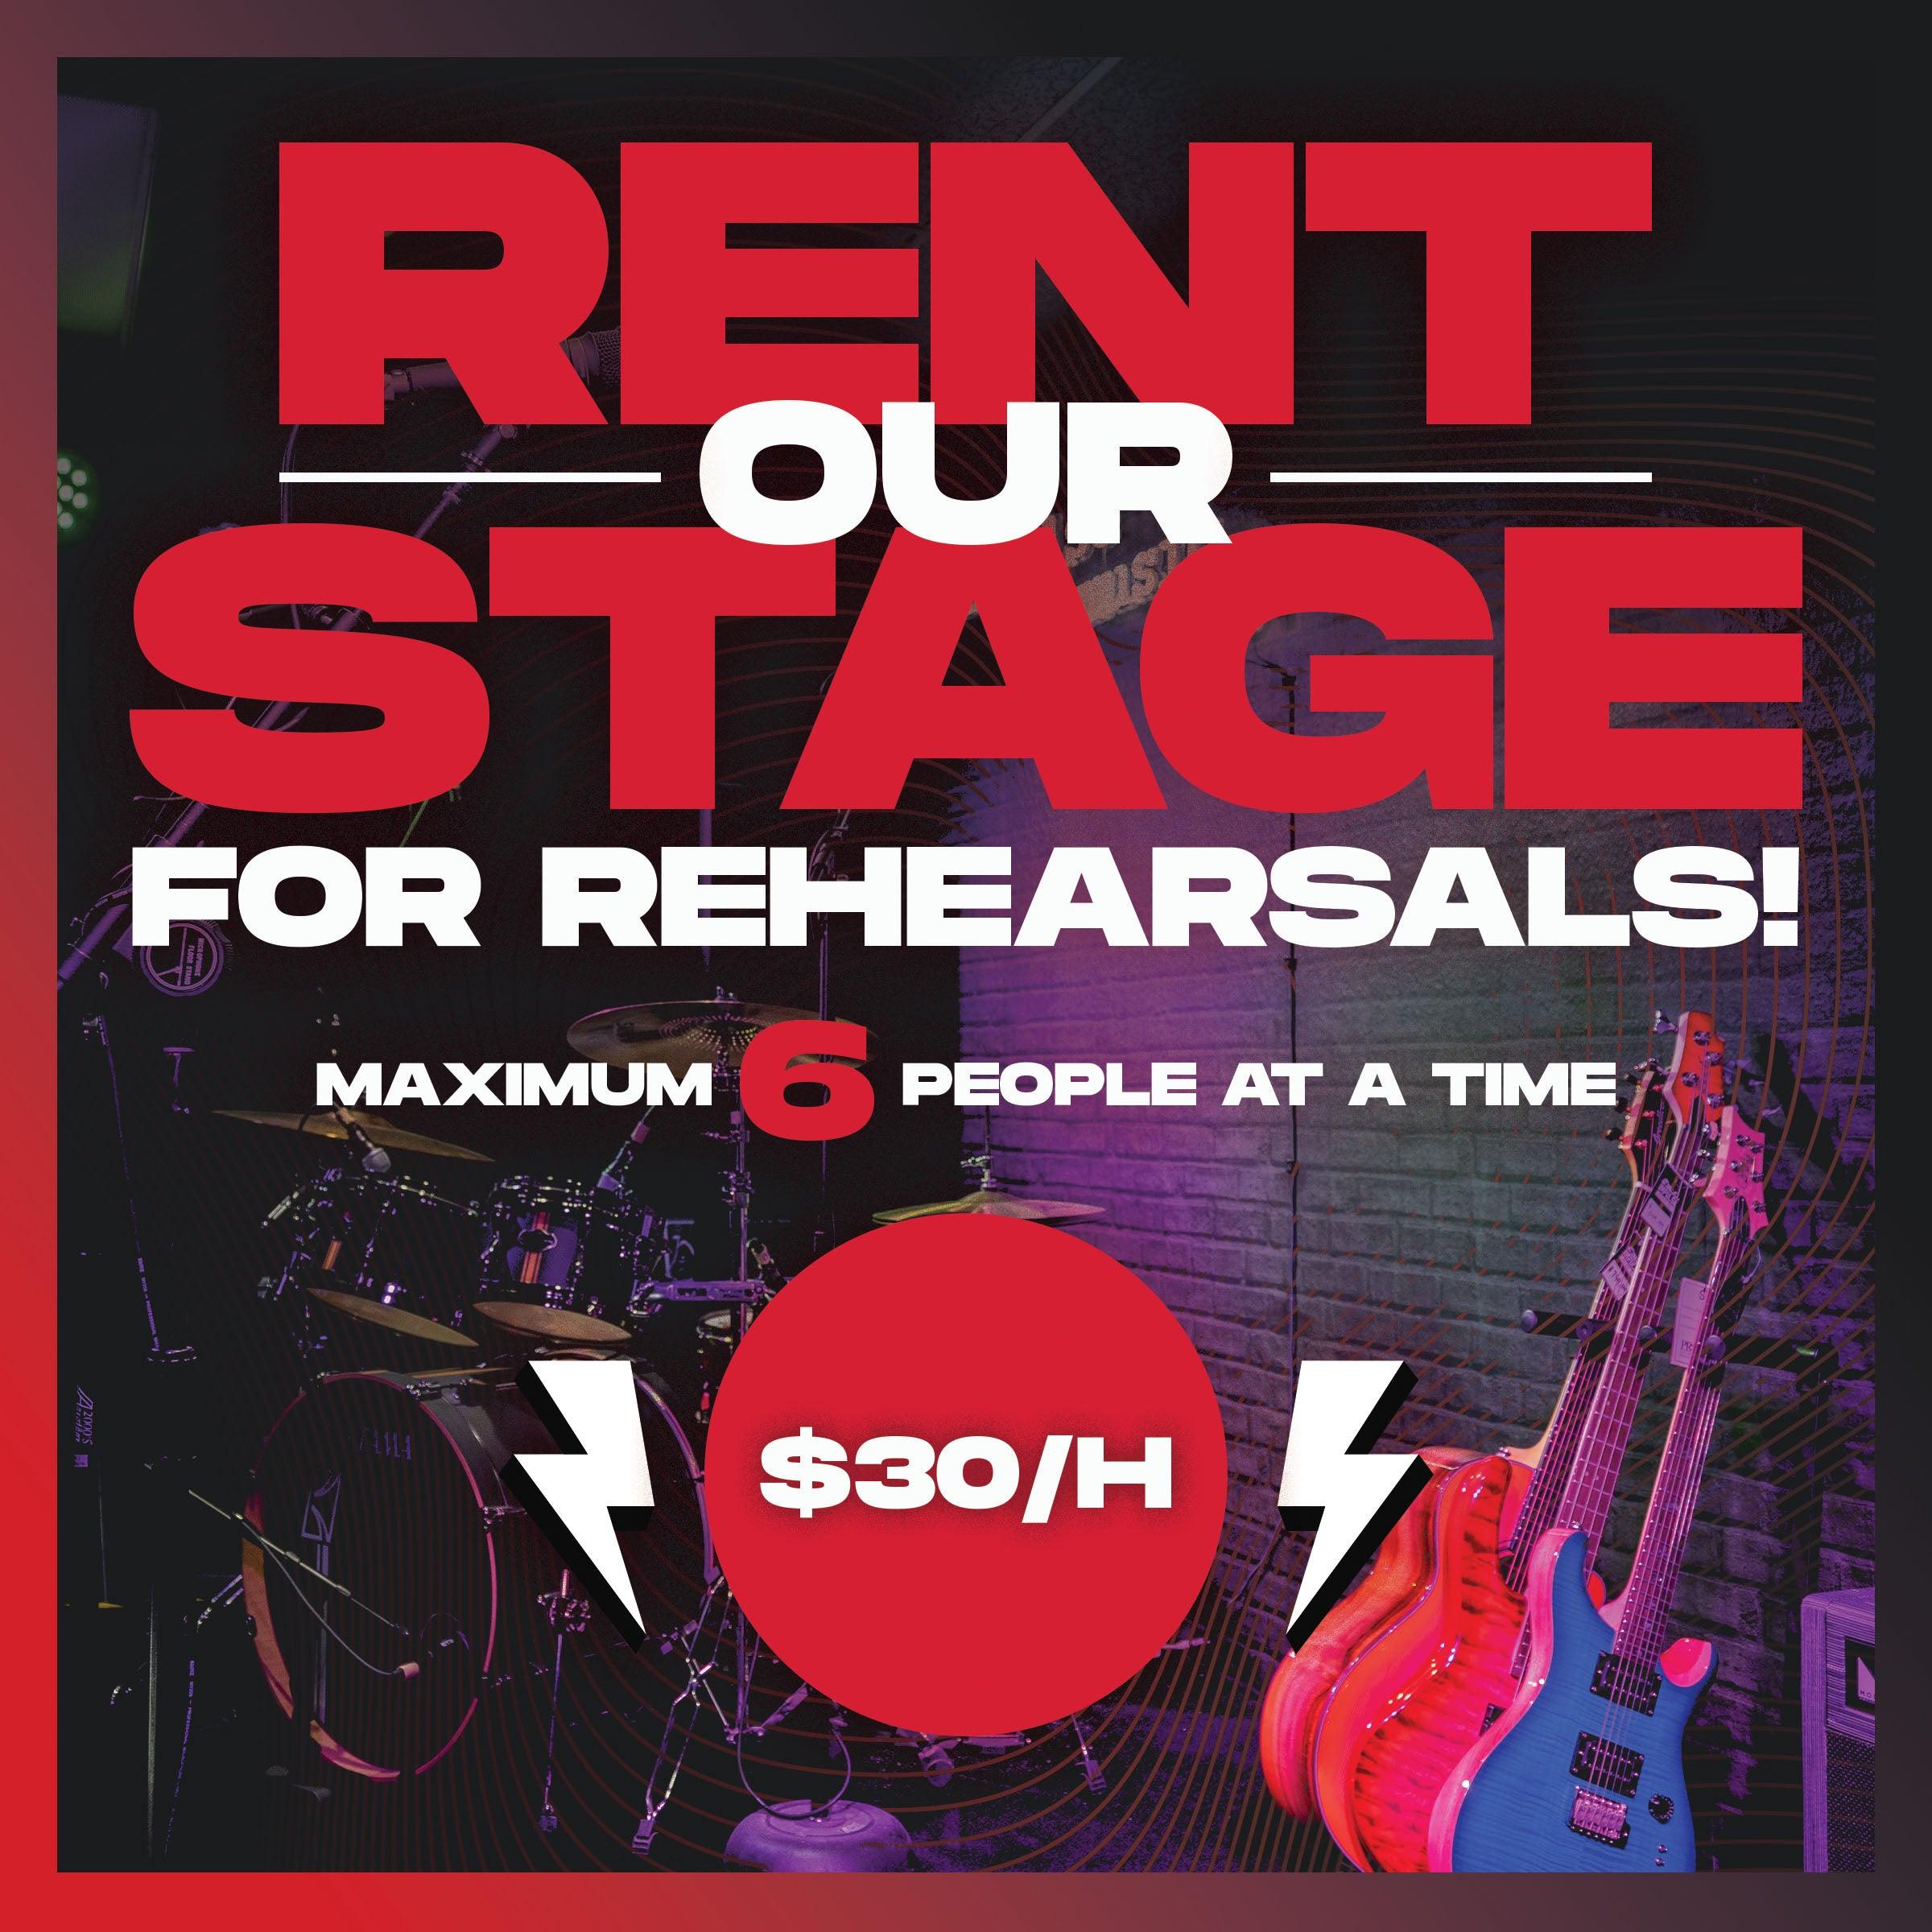 Stage Door Rehearsal Rental Per Hour - Impulse Music Co.